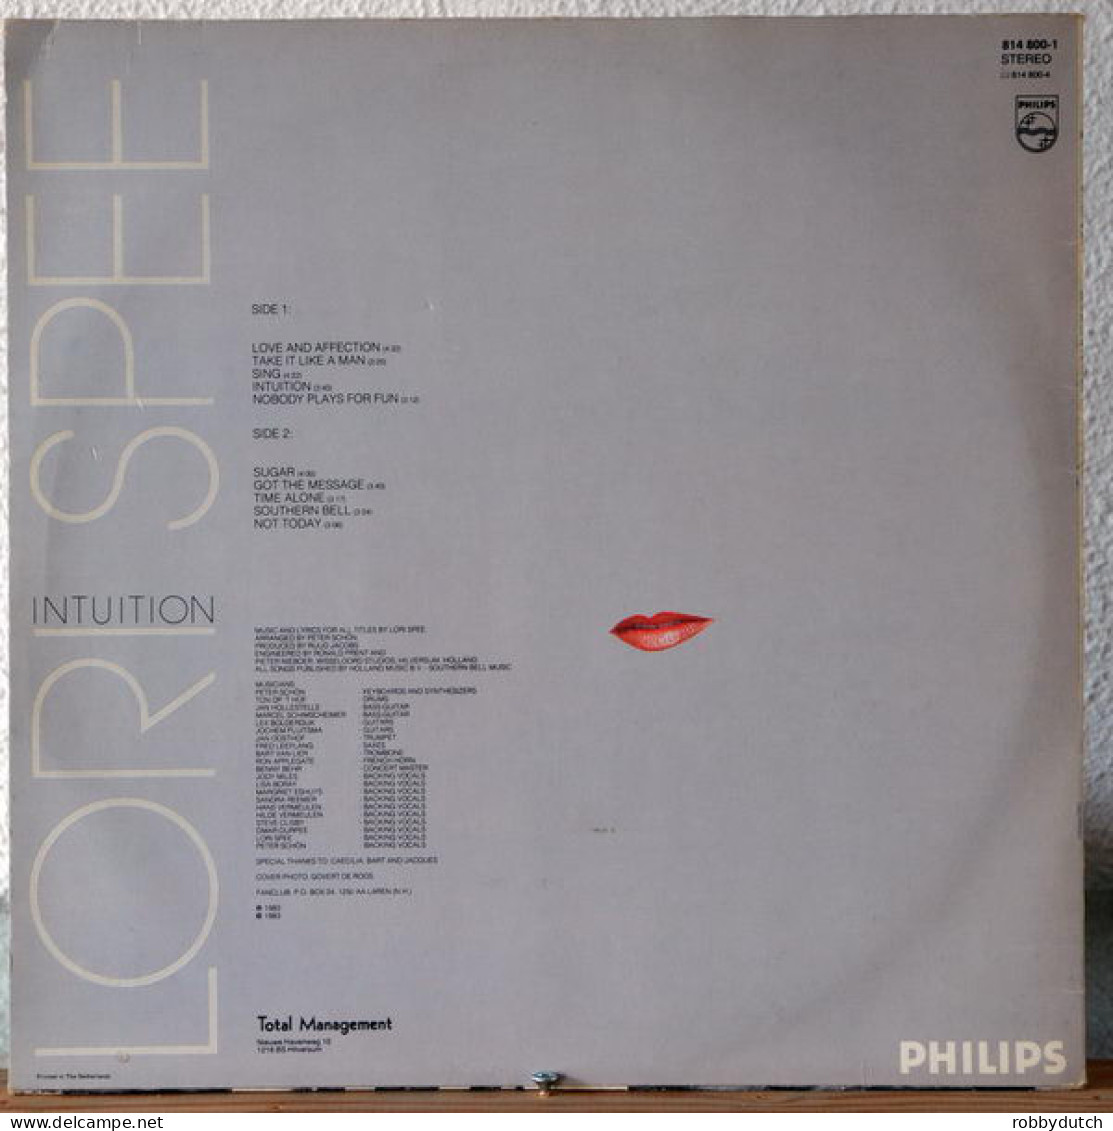 * LP *  LORI SPEE - INTUITION (Holland 1983 EX-) - Disco, Pop